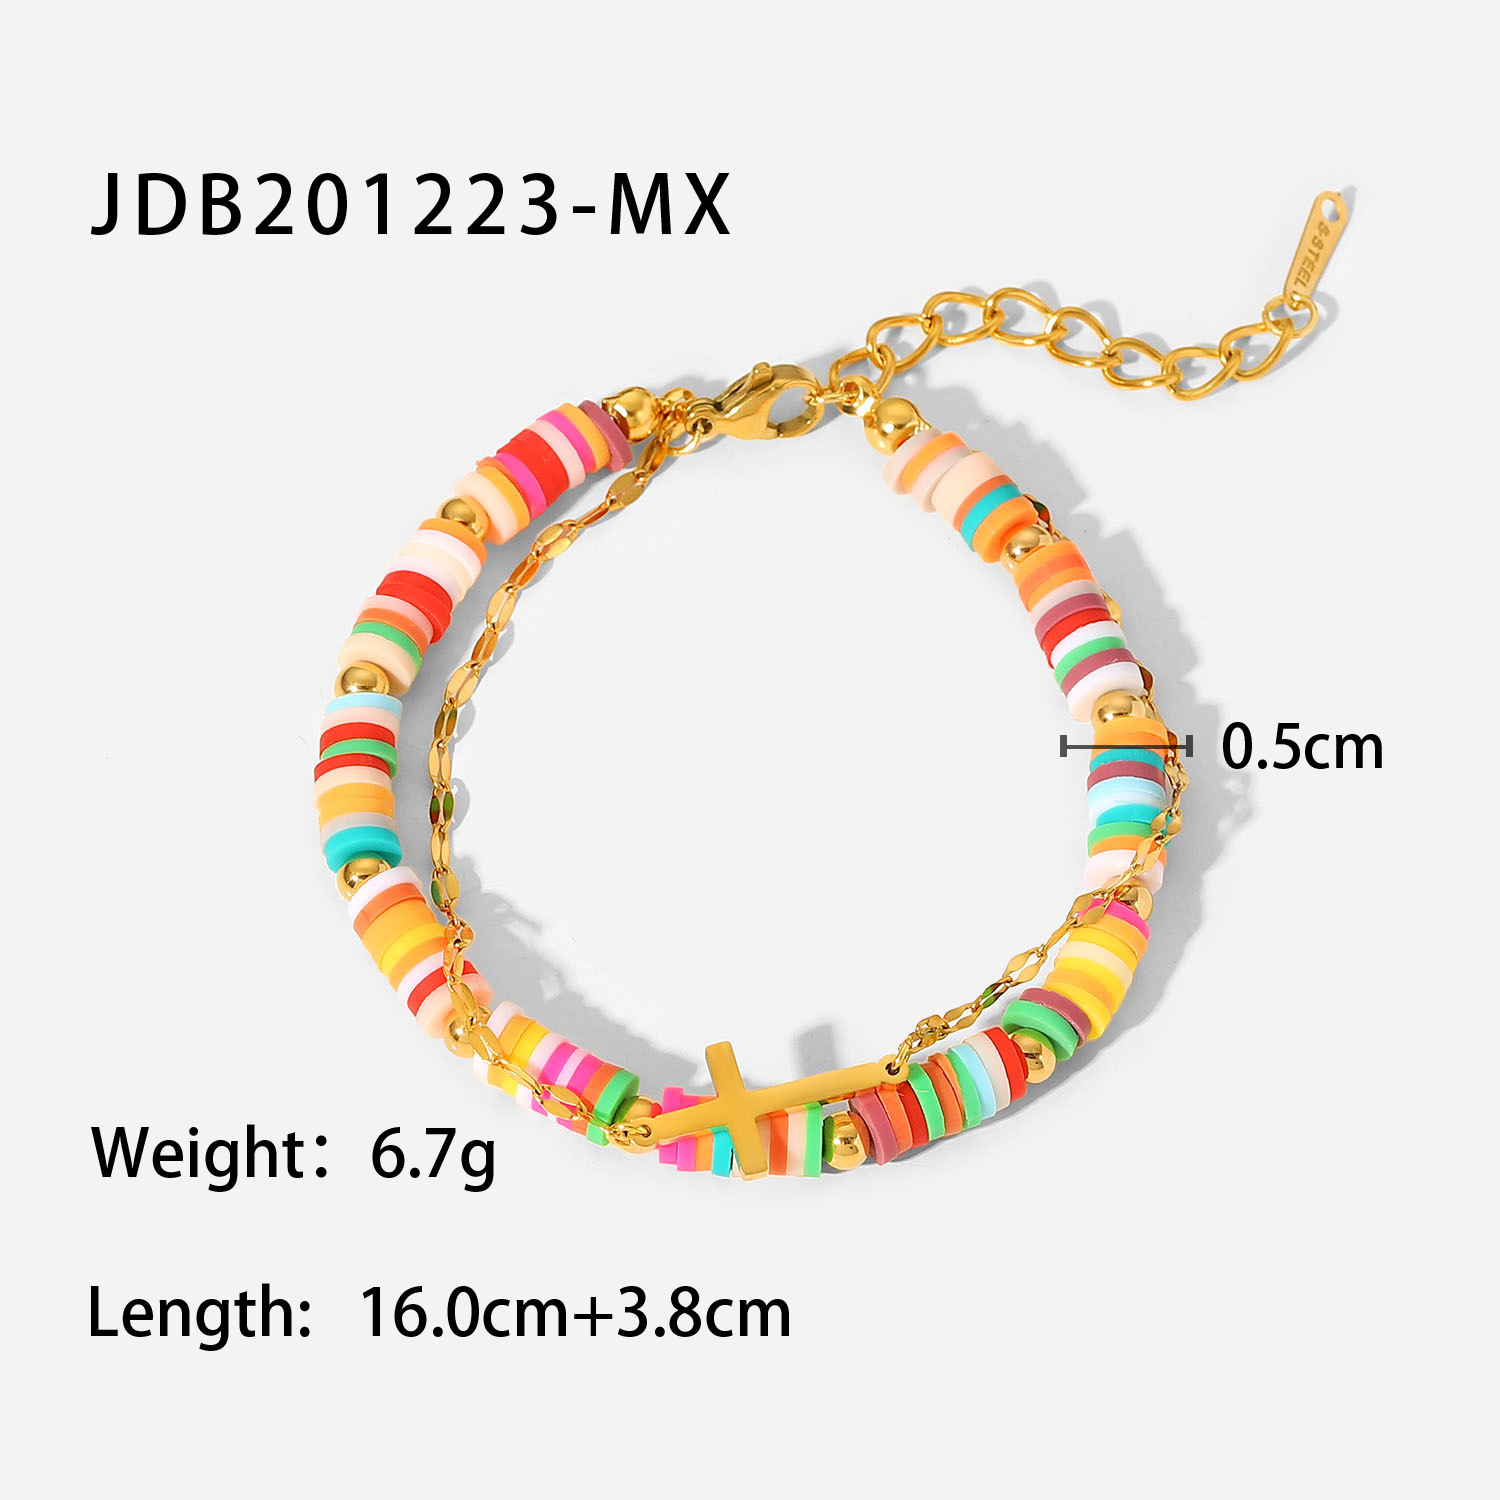 JDB201223-MX